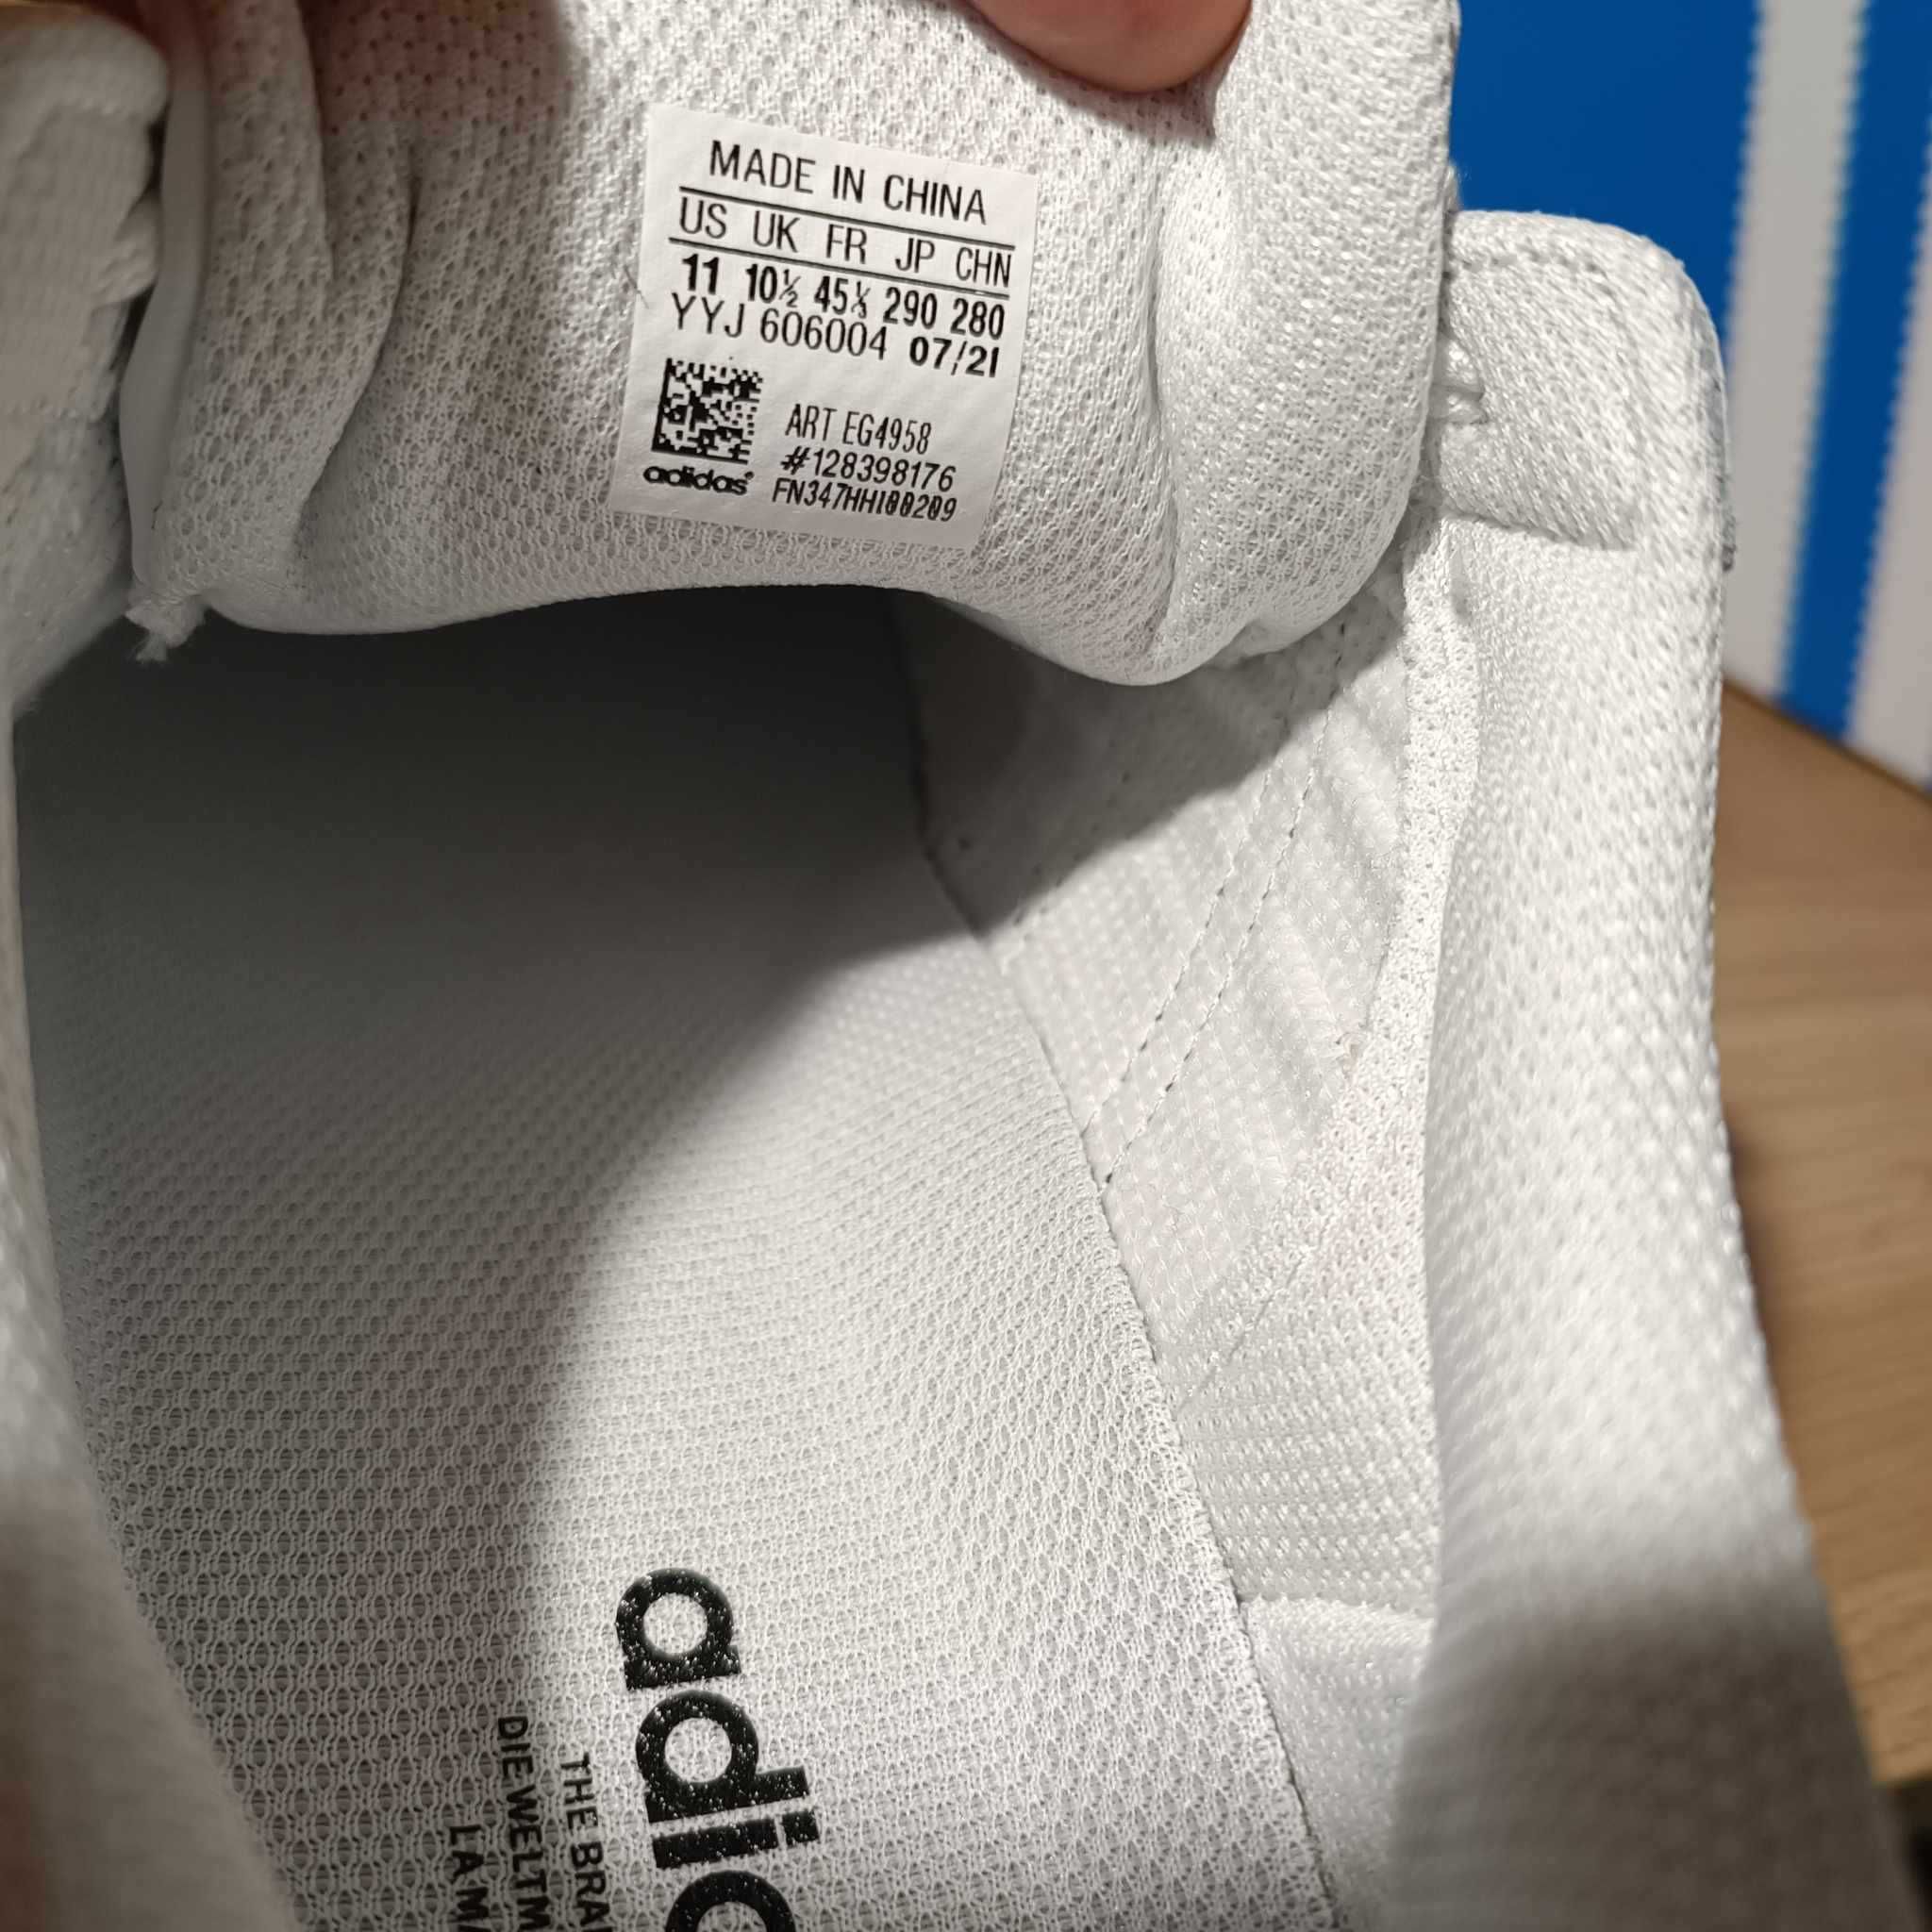 Adidas Superstar Originals r. 45 1/3 (29 cm) EG4958 white black